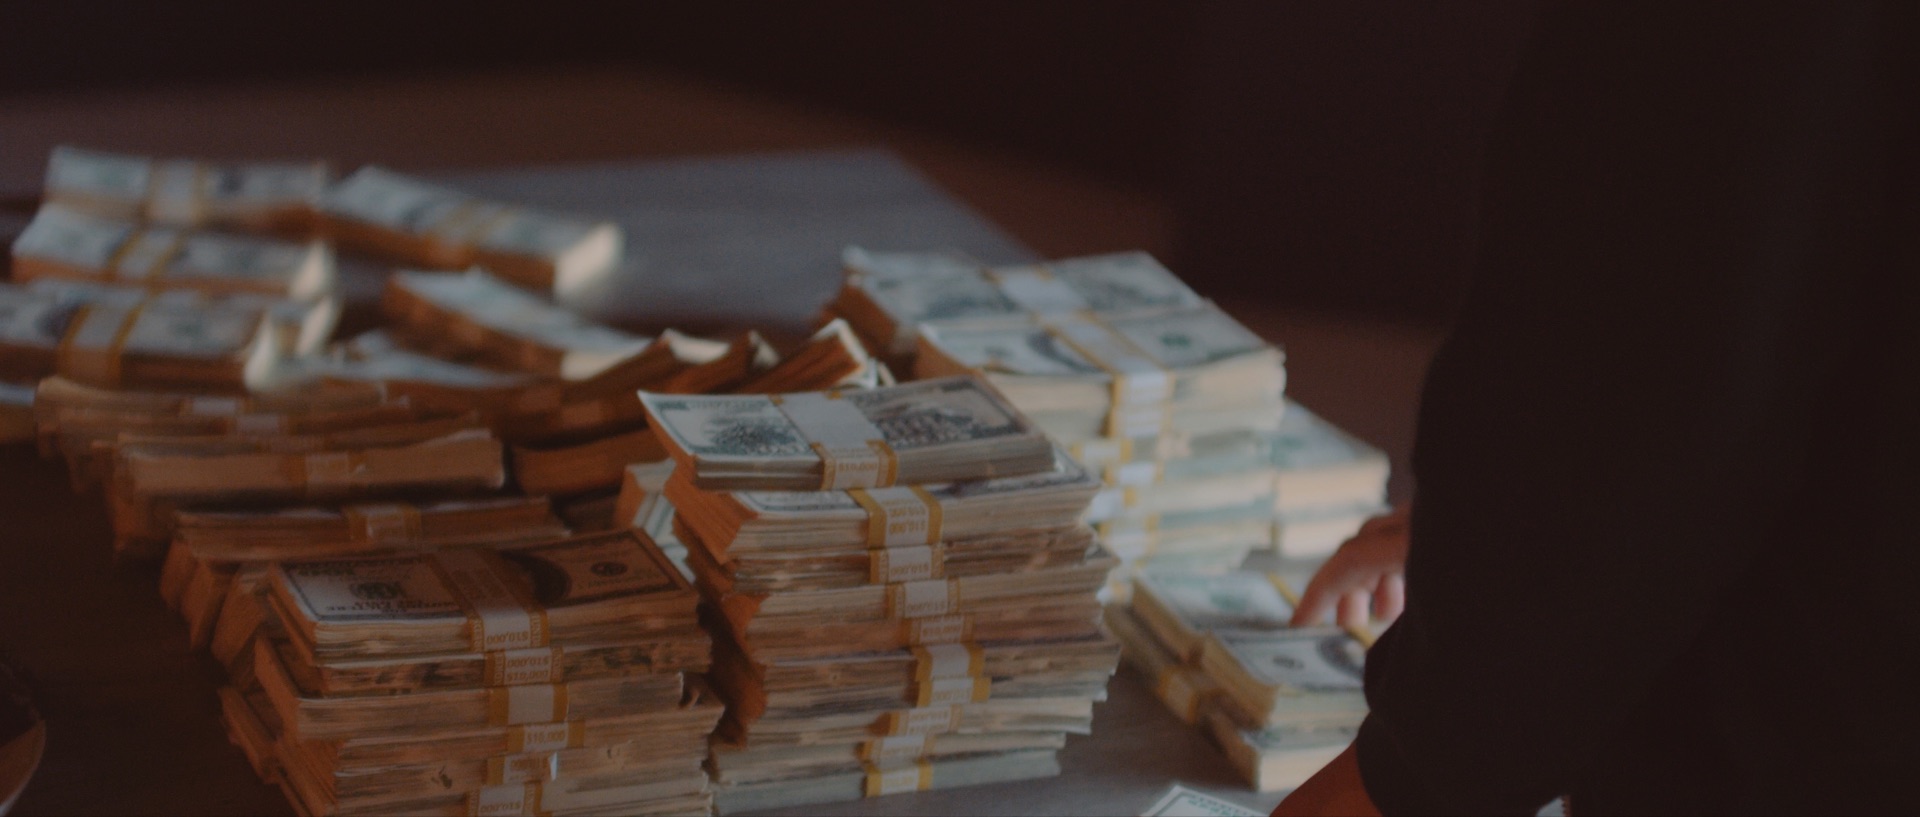 IU CI Studios Page C&I Studios Blog Closeup of stacks of paper money on a table